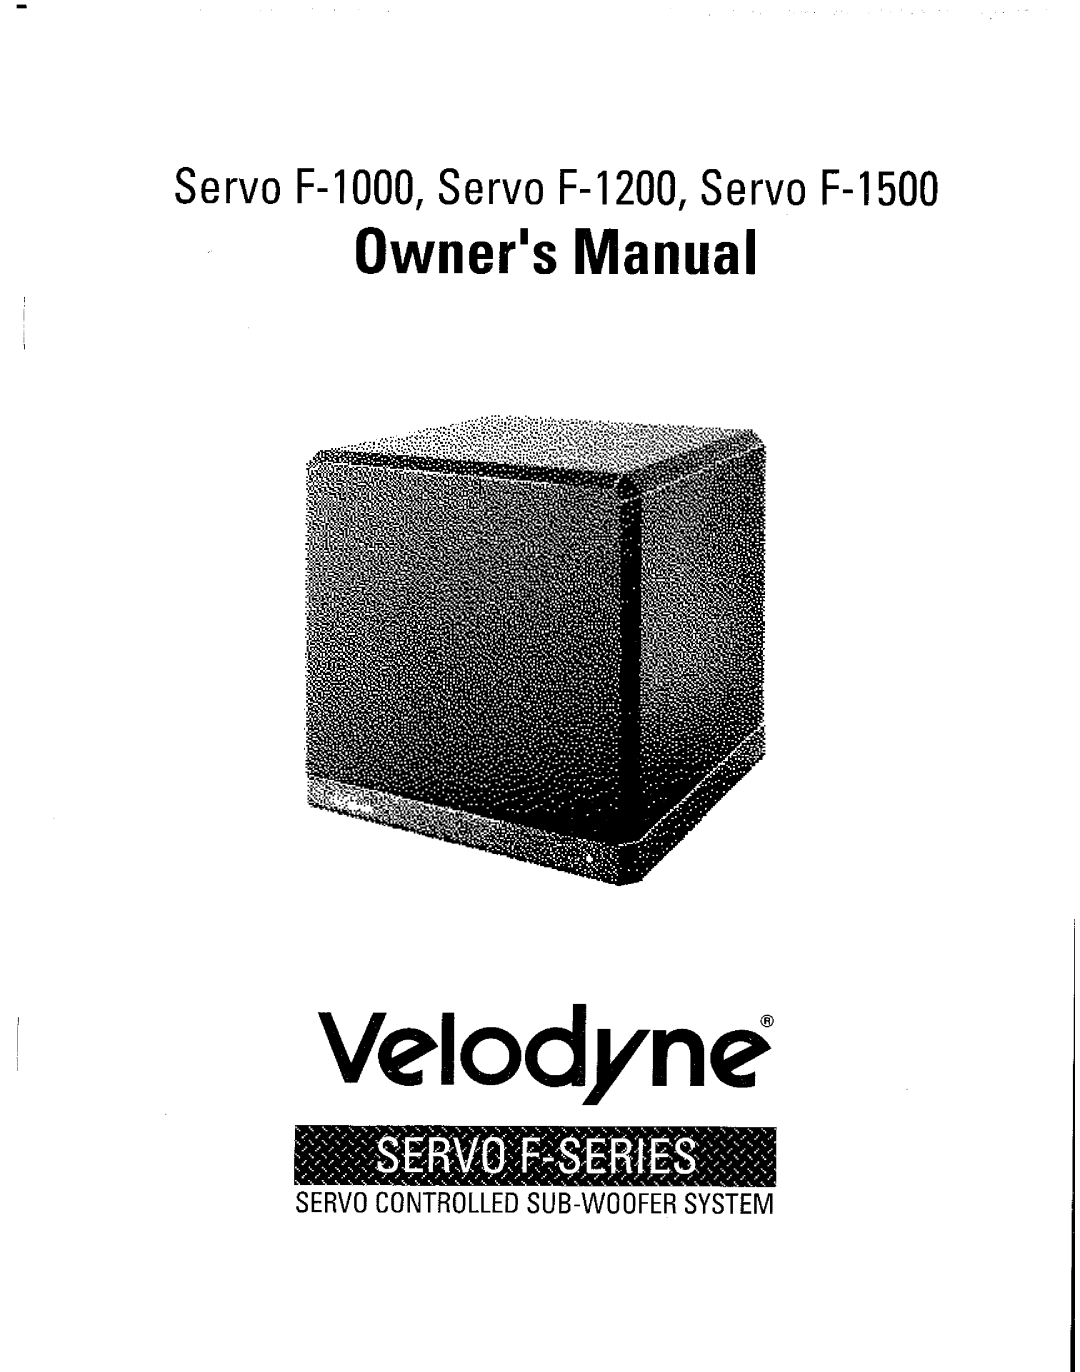 Velodyne Acoustics F-1500, F-1000, F-1200 manual 